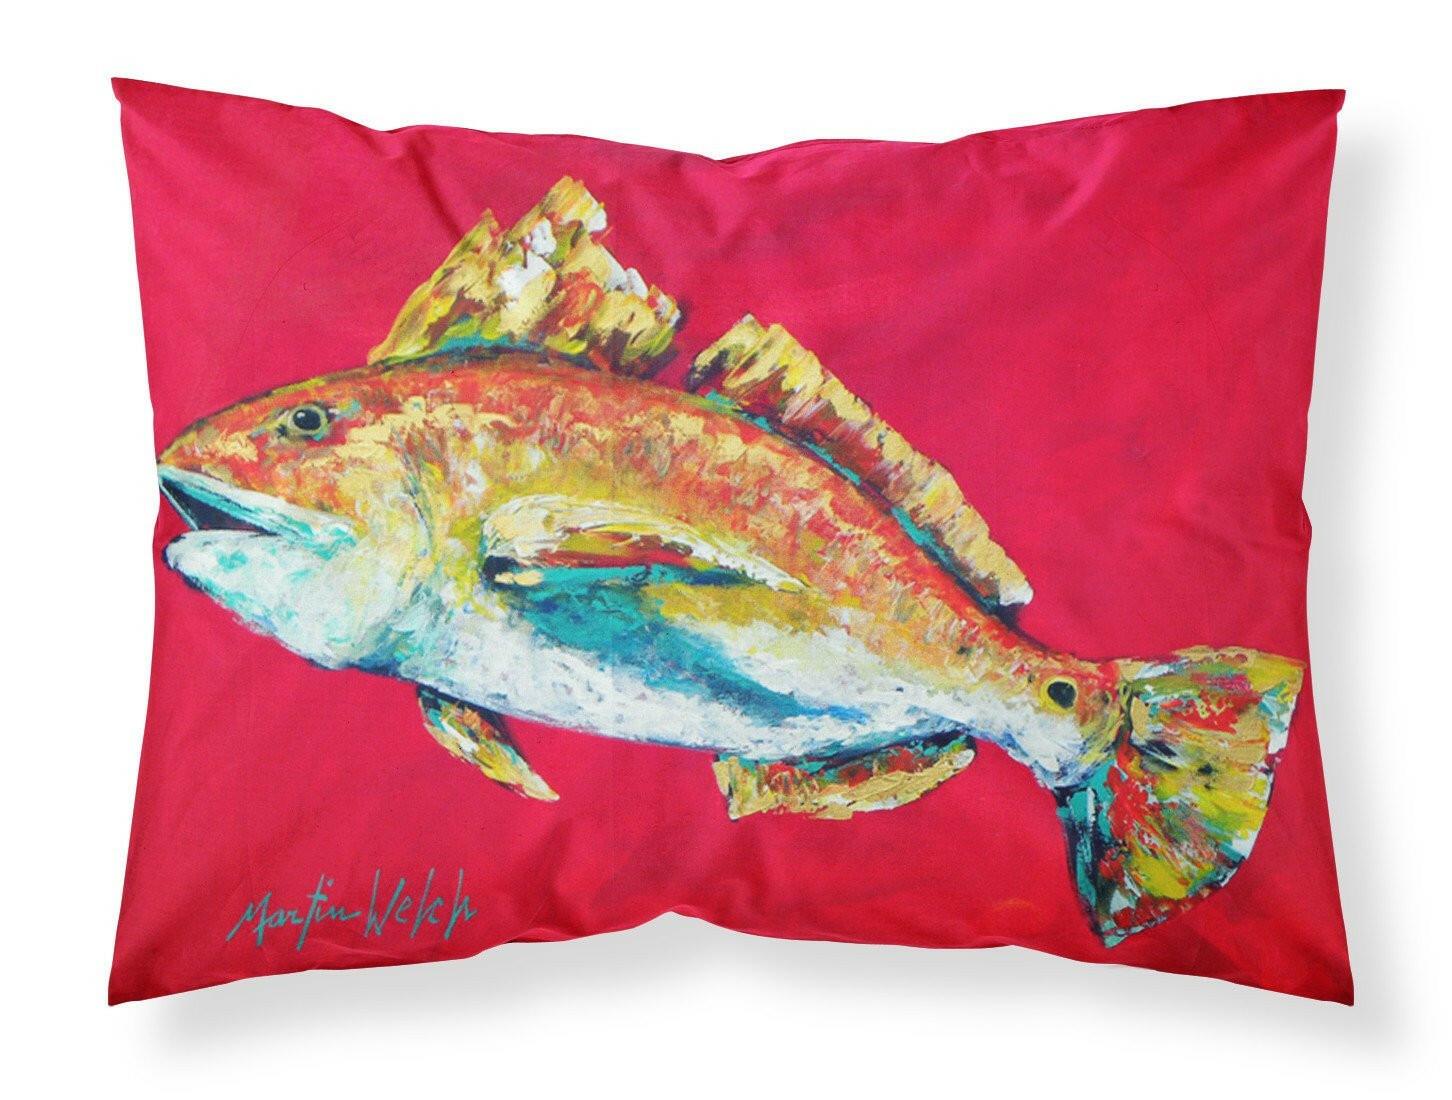 Fish - Red Fish Woo Hoo Moisture wicking Fabric standard pillowcase by Caroline's Treasures